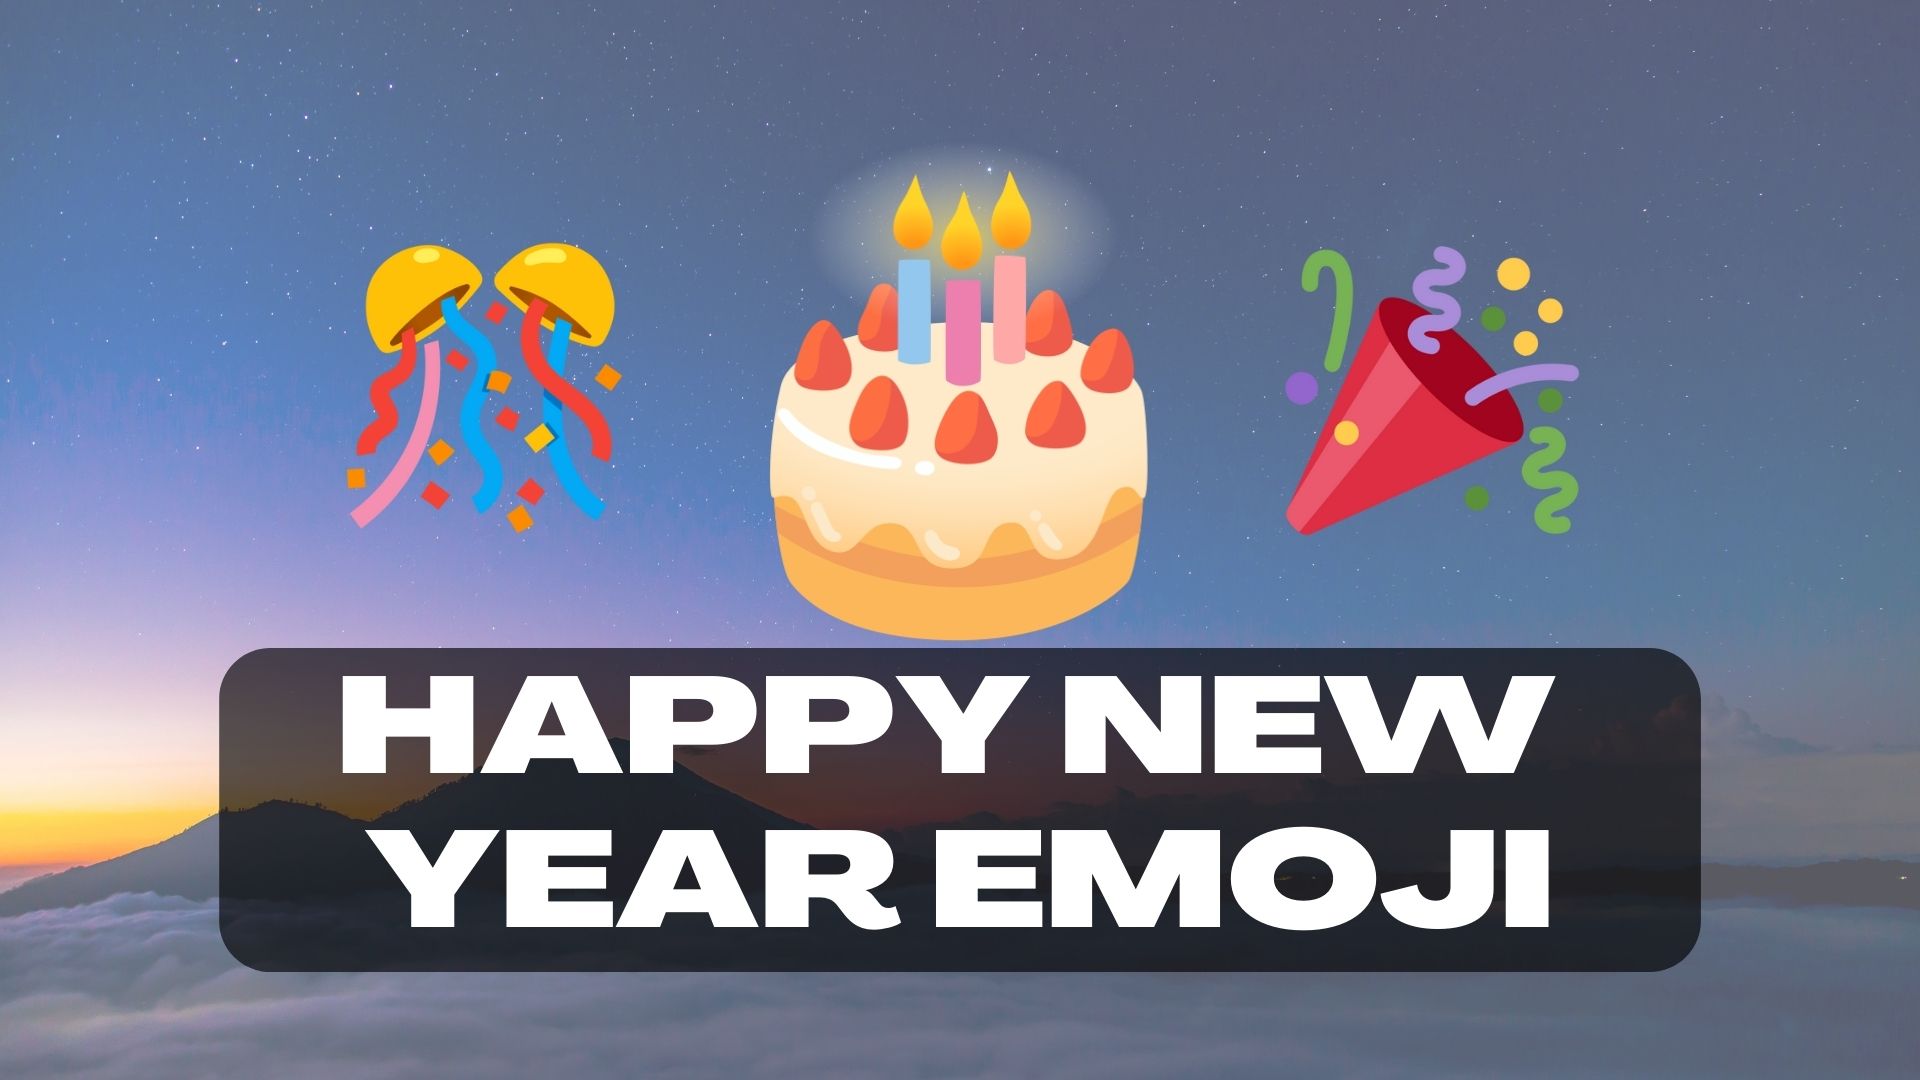 Happy new year emoji